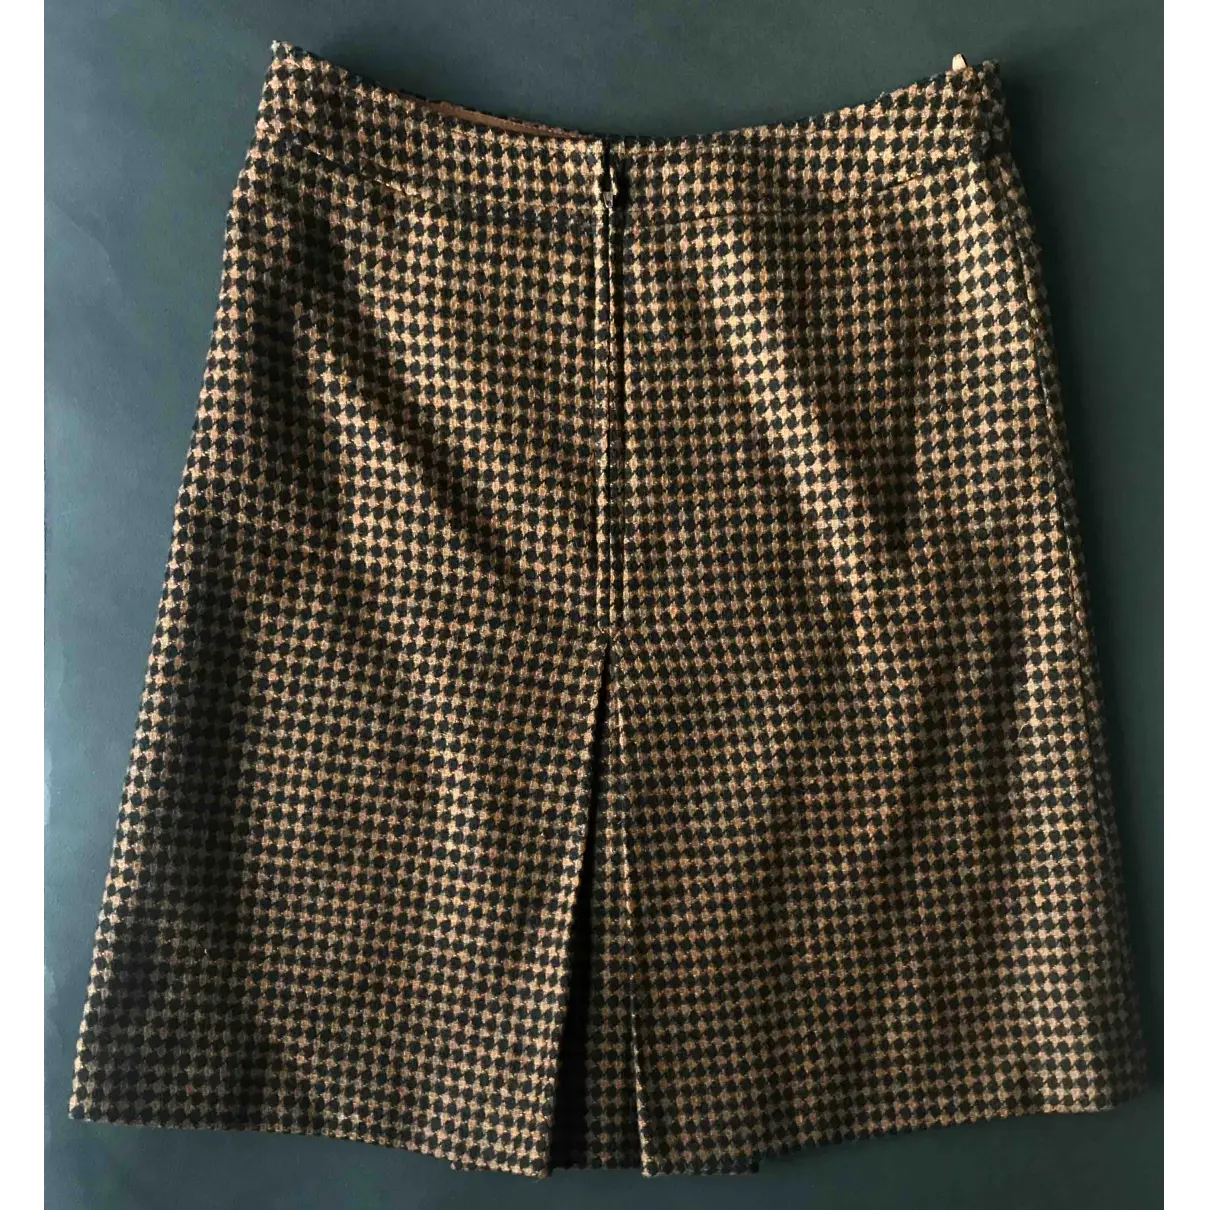 Celine Wool mid-length skirt for sale - Vintage